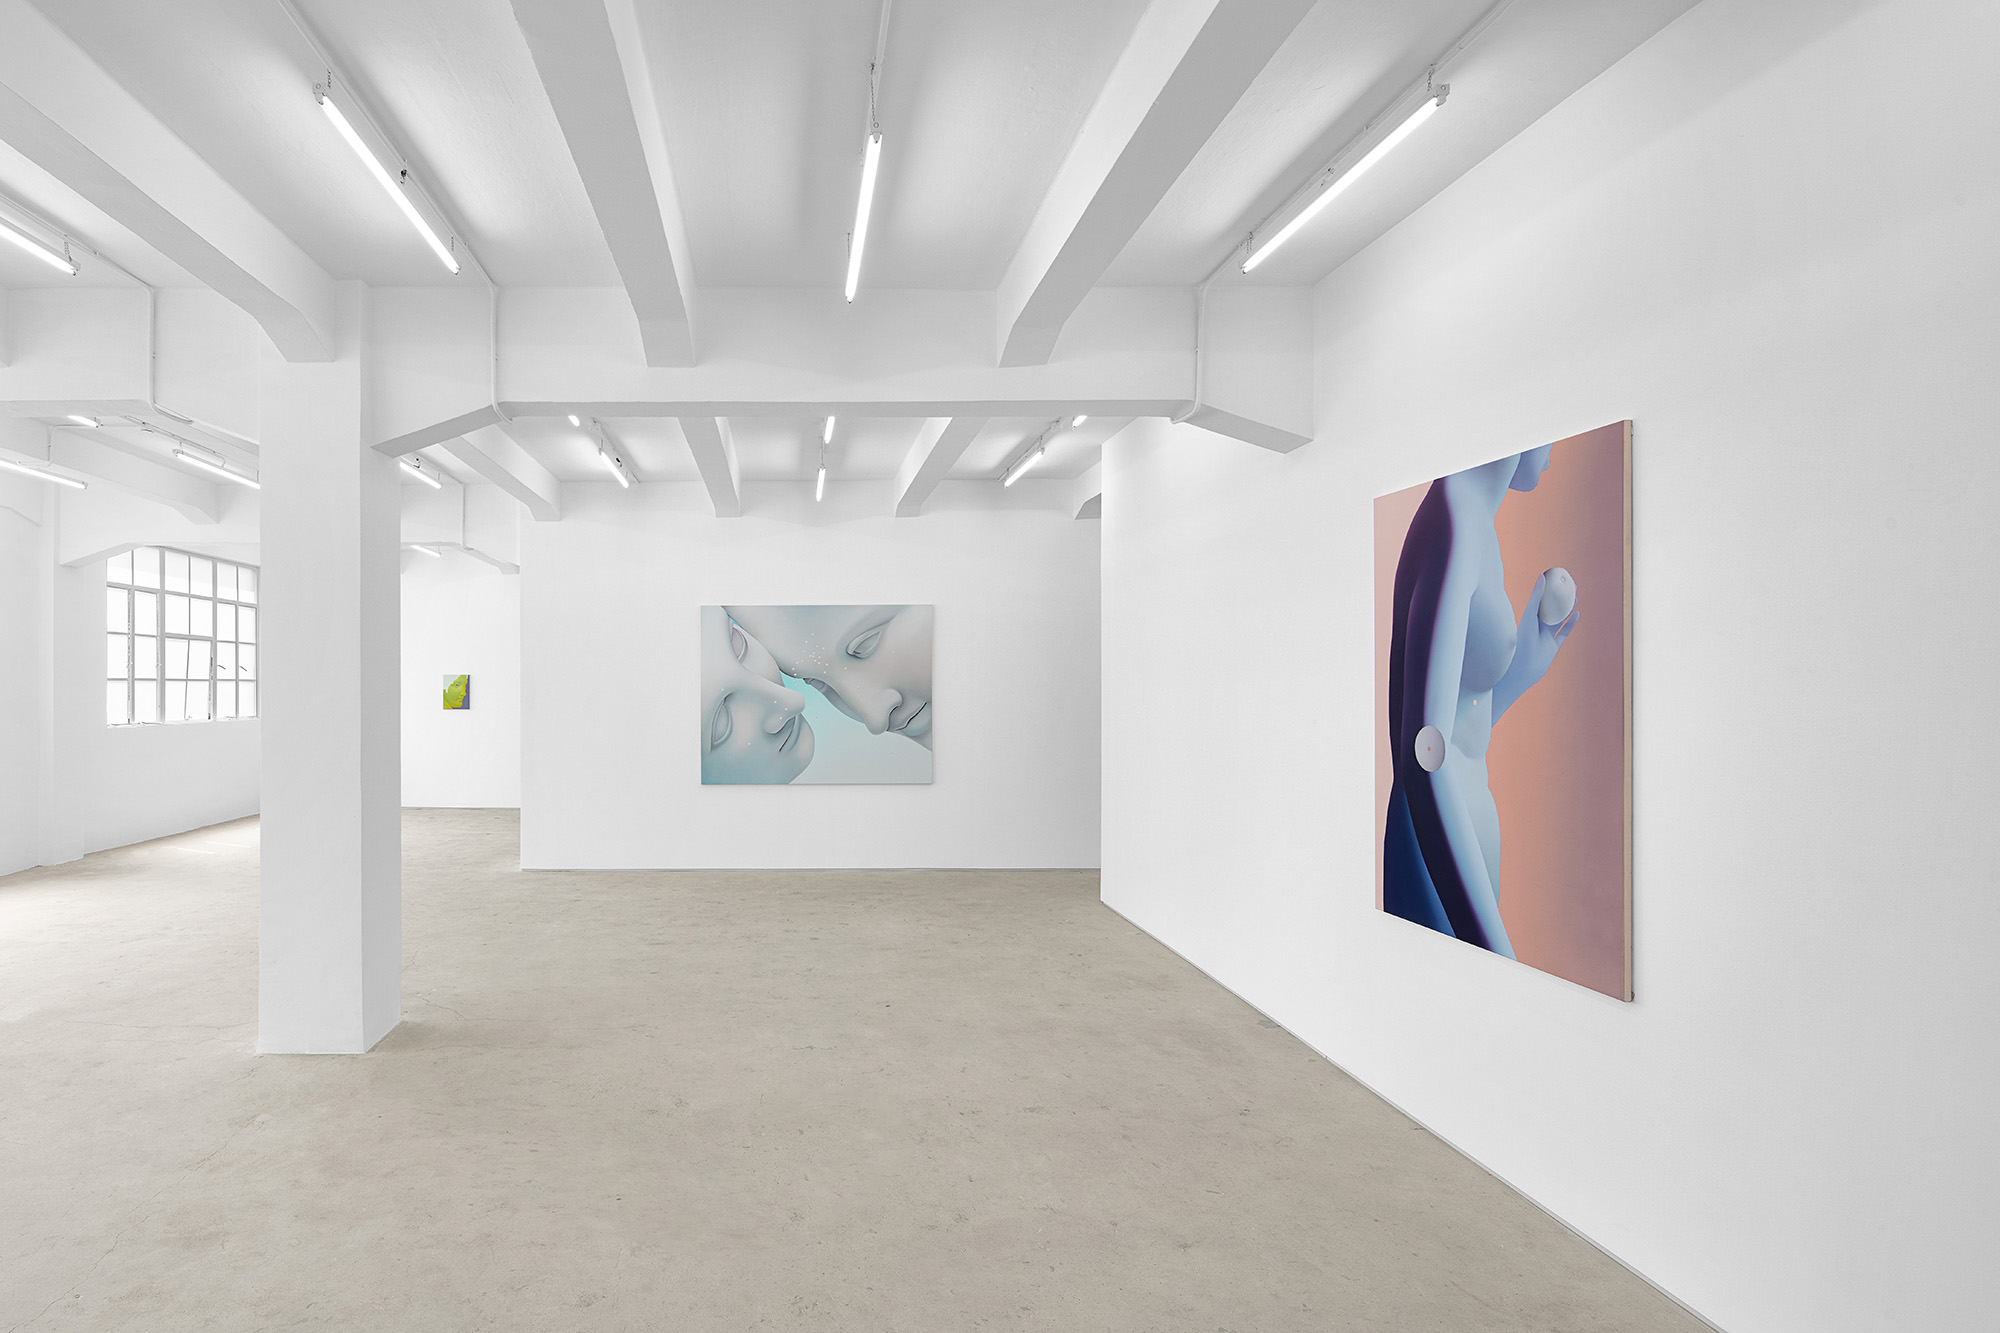 Vivian Greven, The Negatives, solo exhibition at Gallery Vacancy, installation view 14